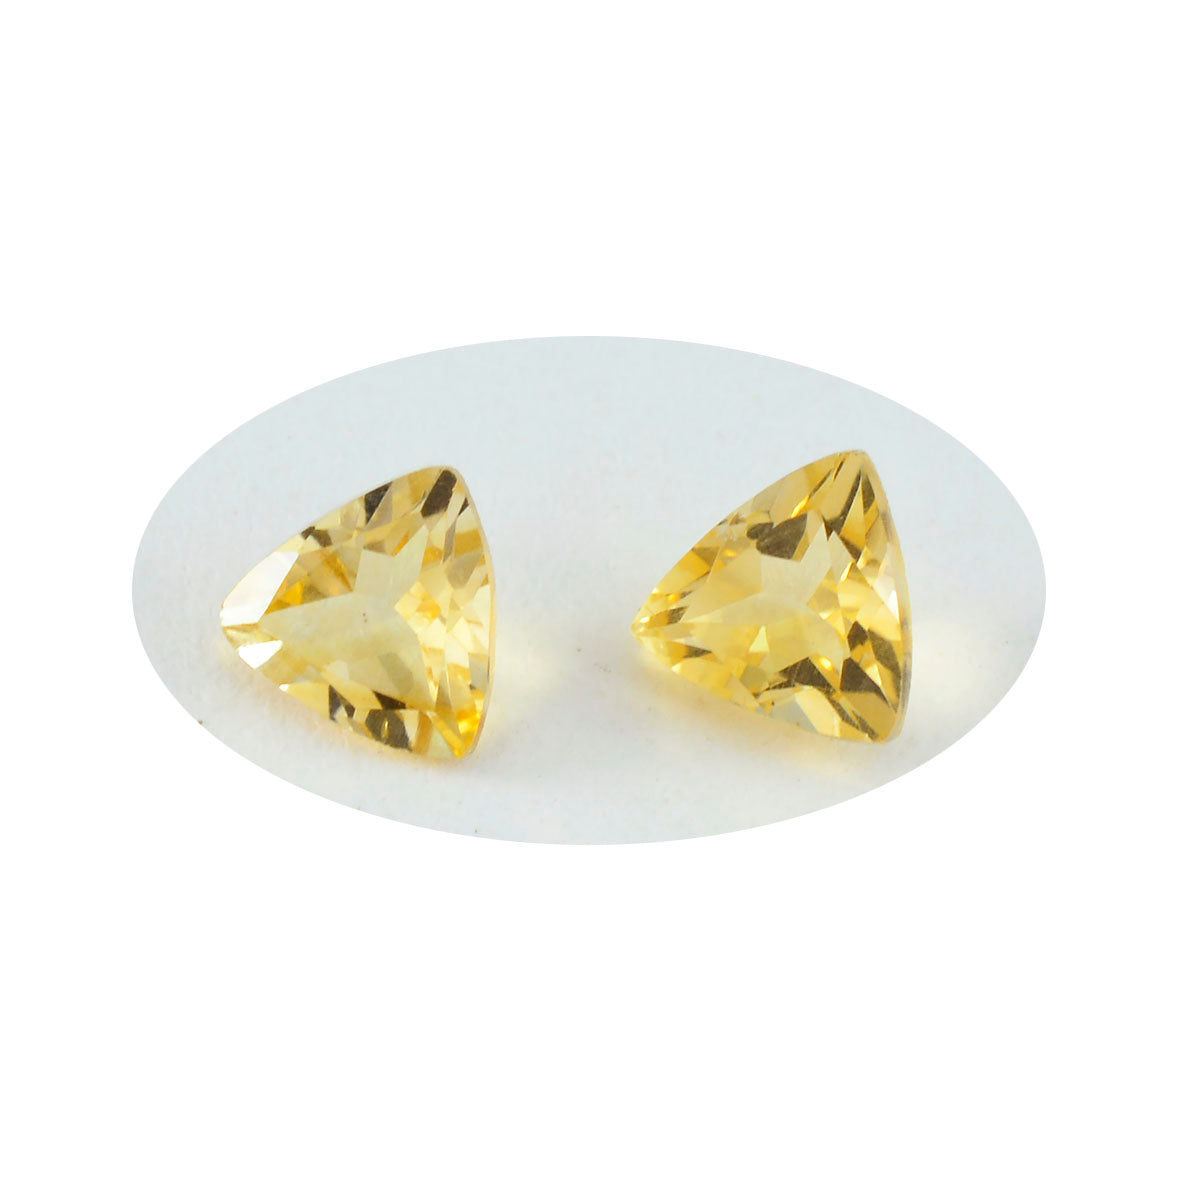 Riyogems 1PC Natural Yellow Citrine Faceted 10x10 mm Trillion Shape startling Quality Loose Gemstone